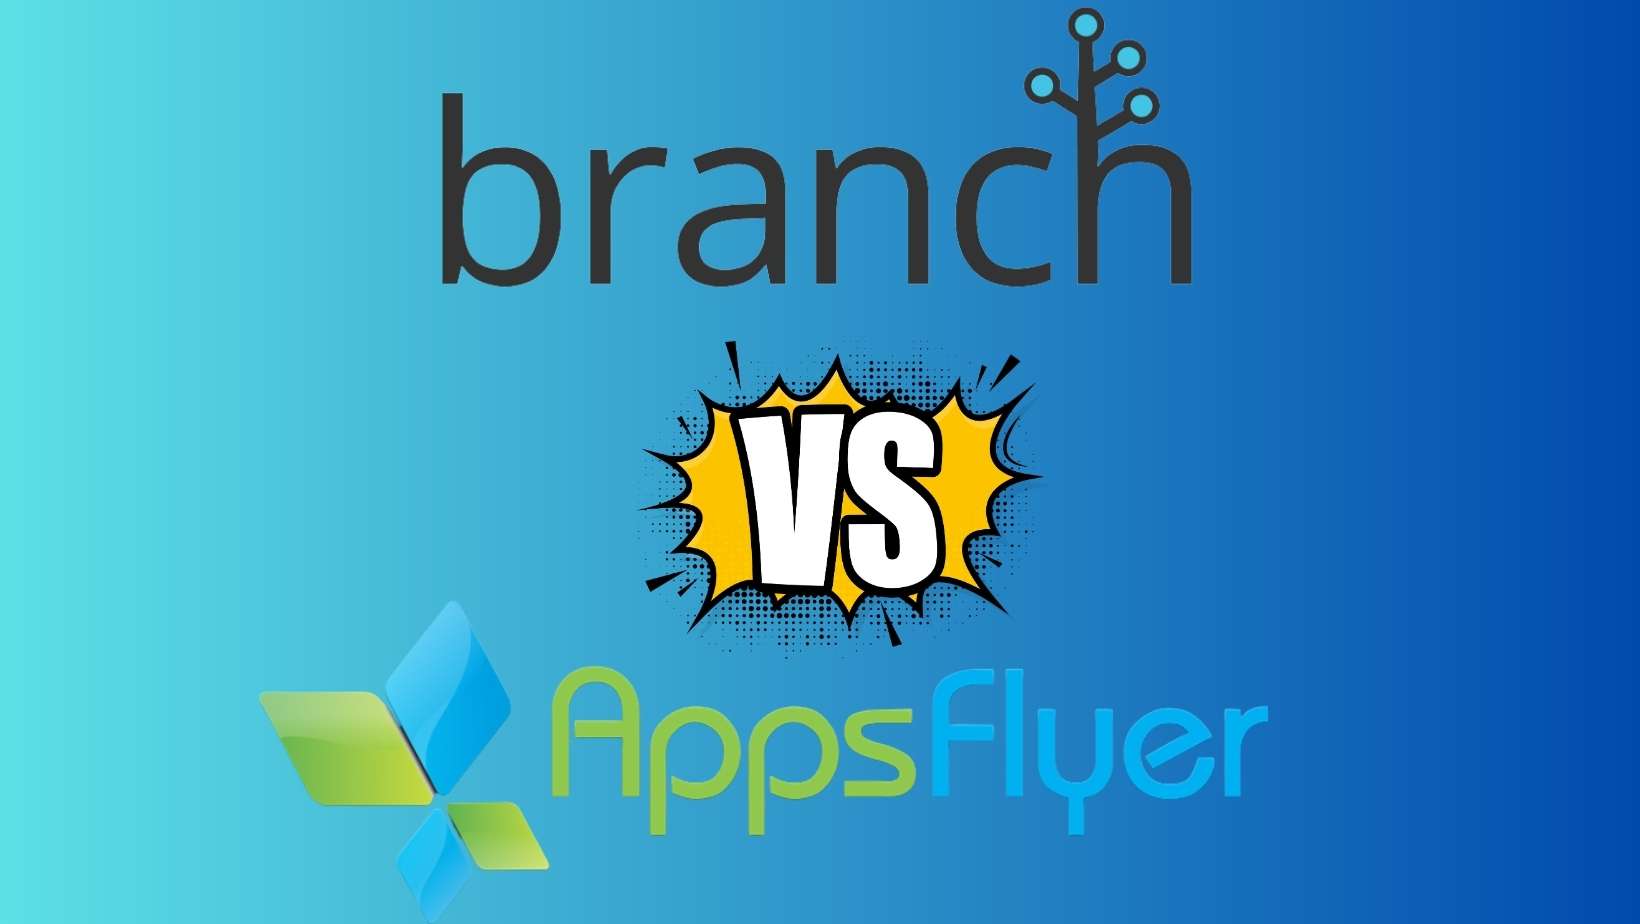 Appsflyer vs branch